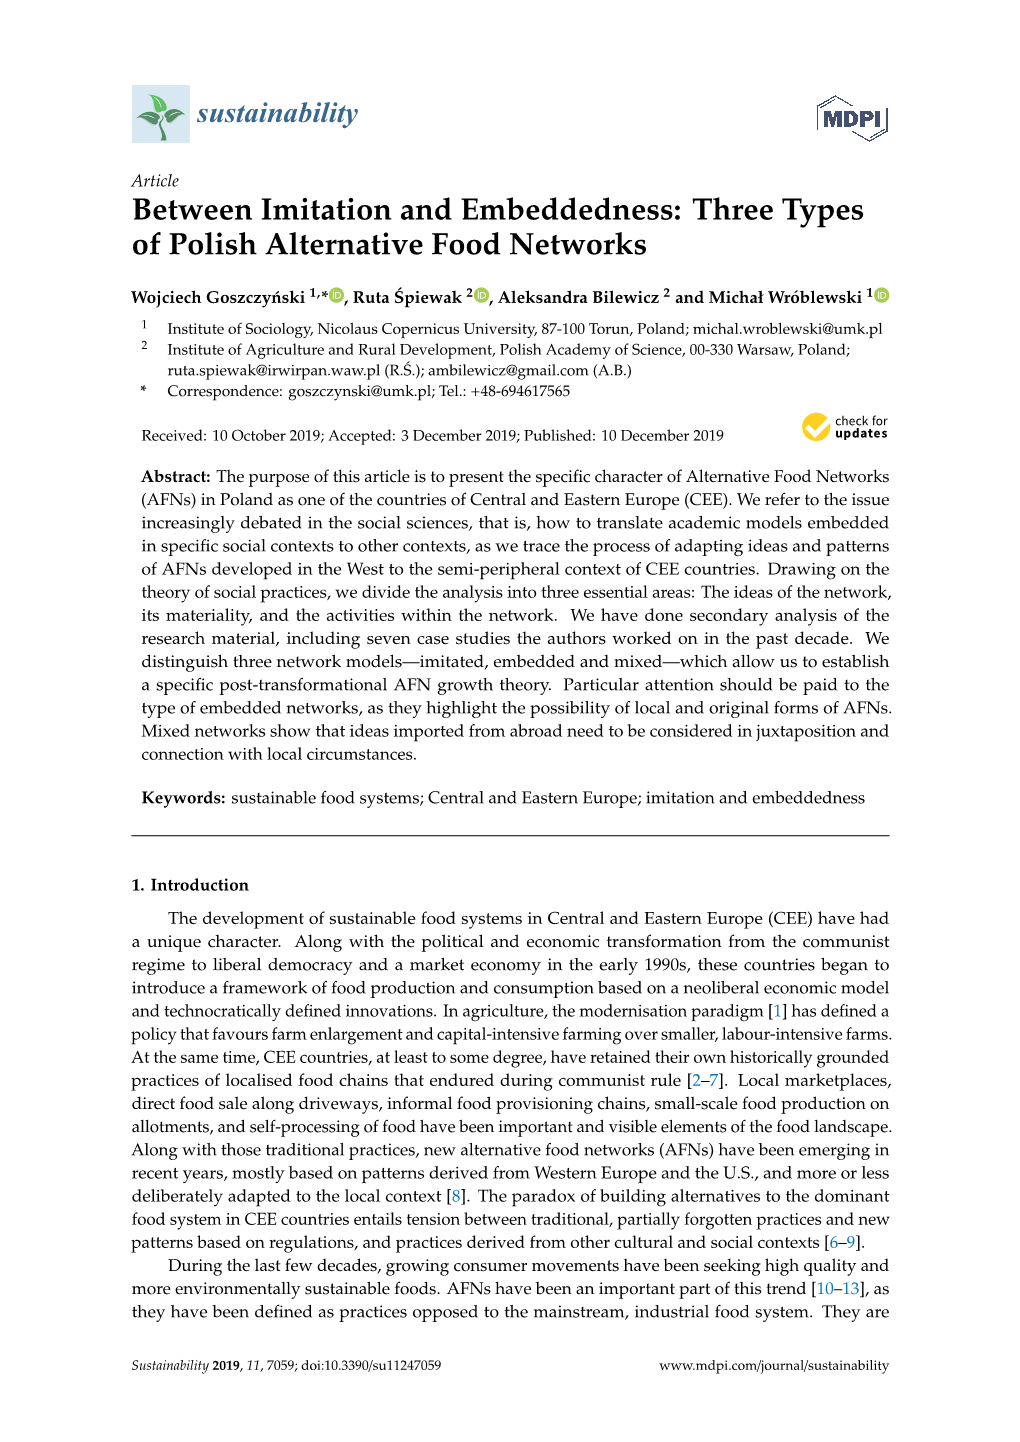 Between Imitation and Embeddedness: Three Types of Polish Alternative Food Networks